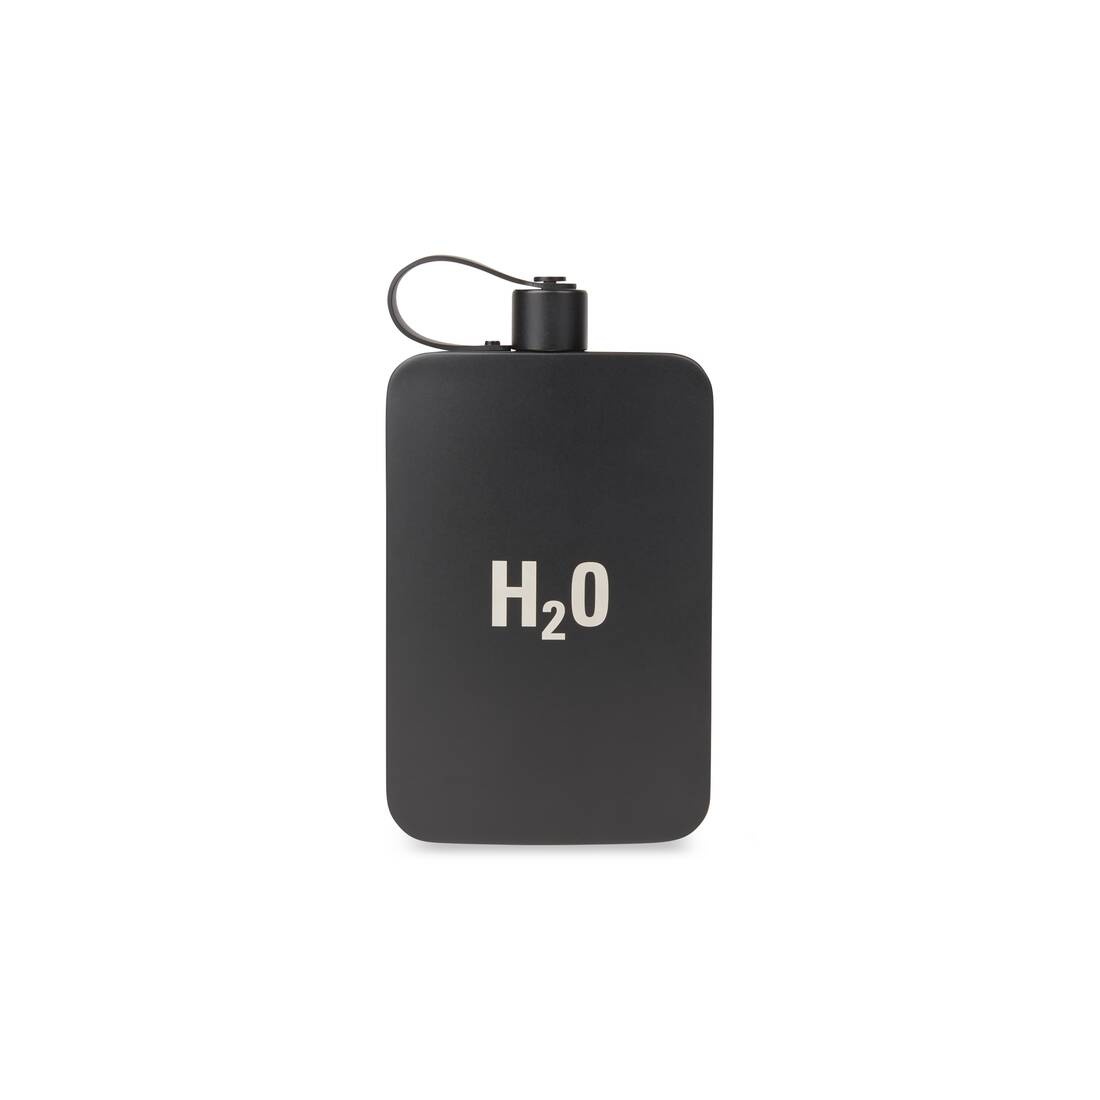 H2o Bottle in Black - 1